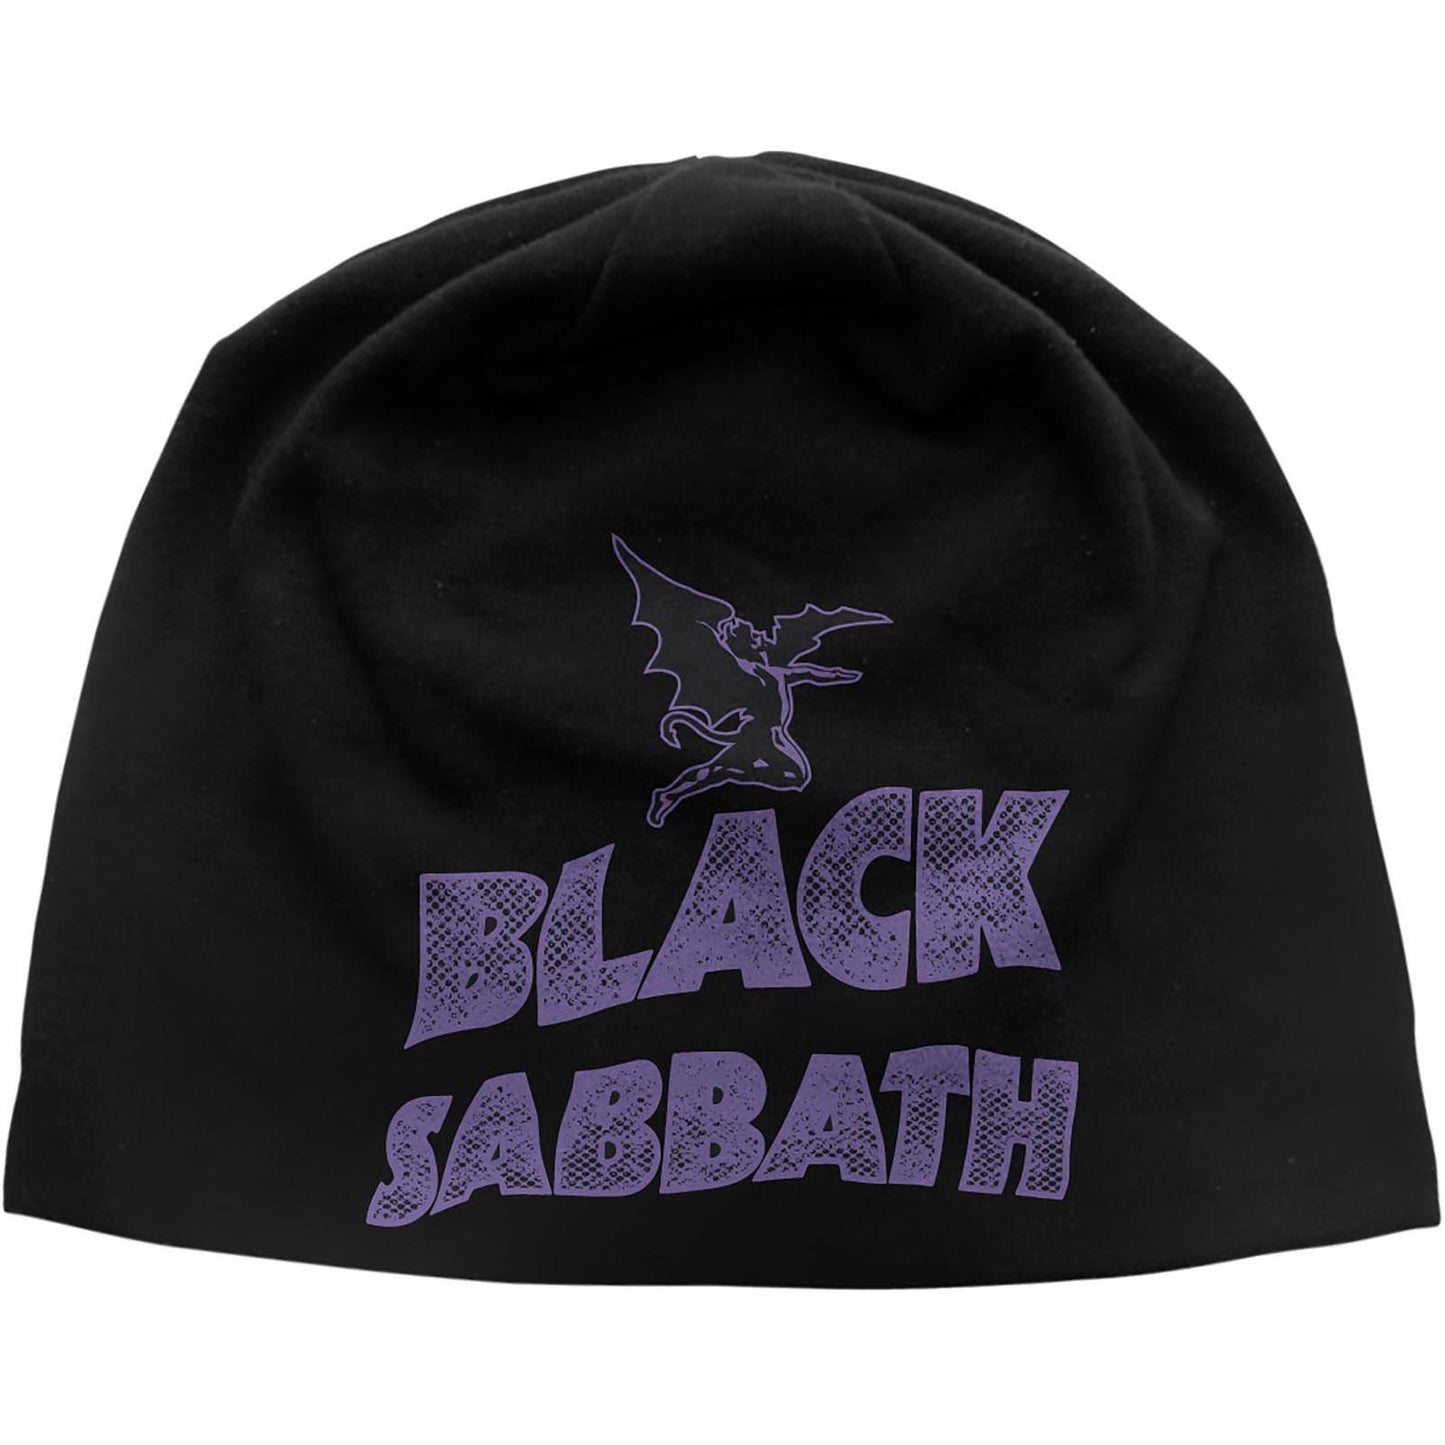 Black Sabbath Beanie Hat: Logo & Devil